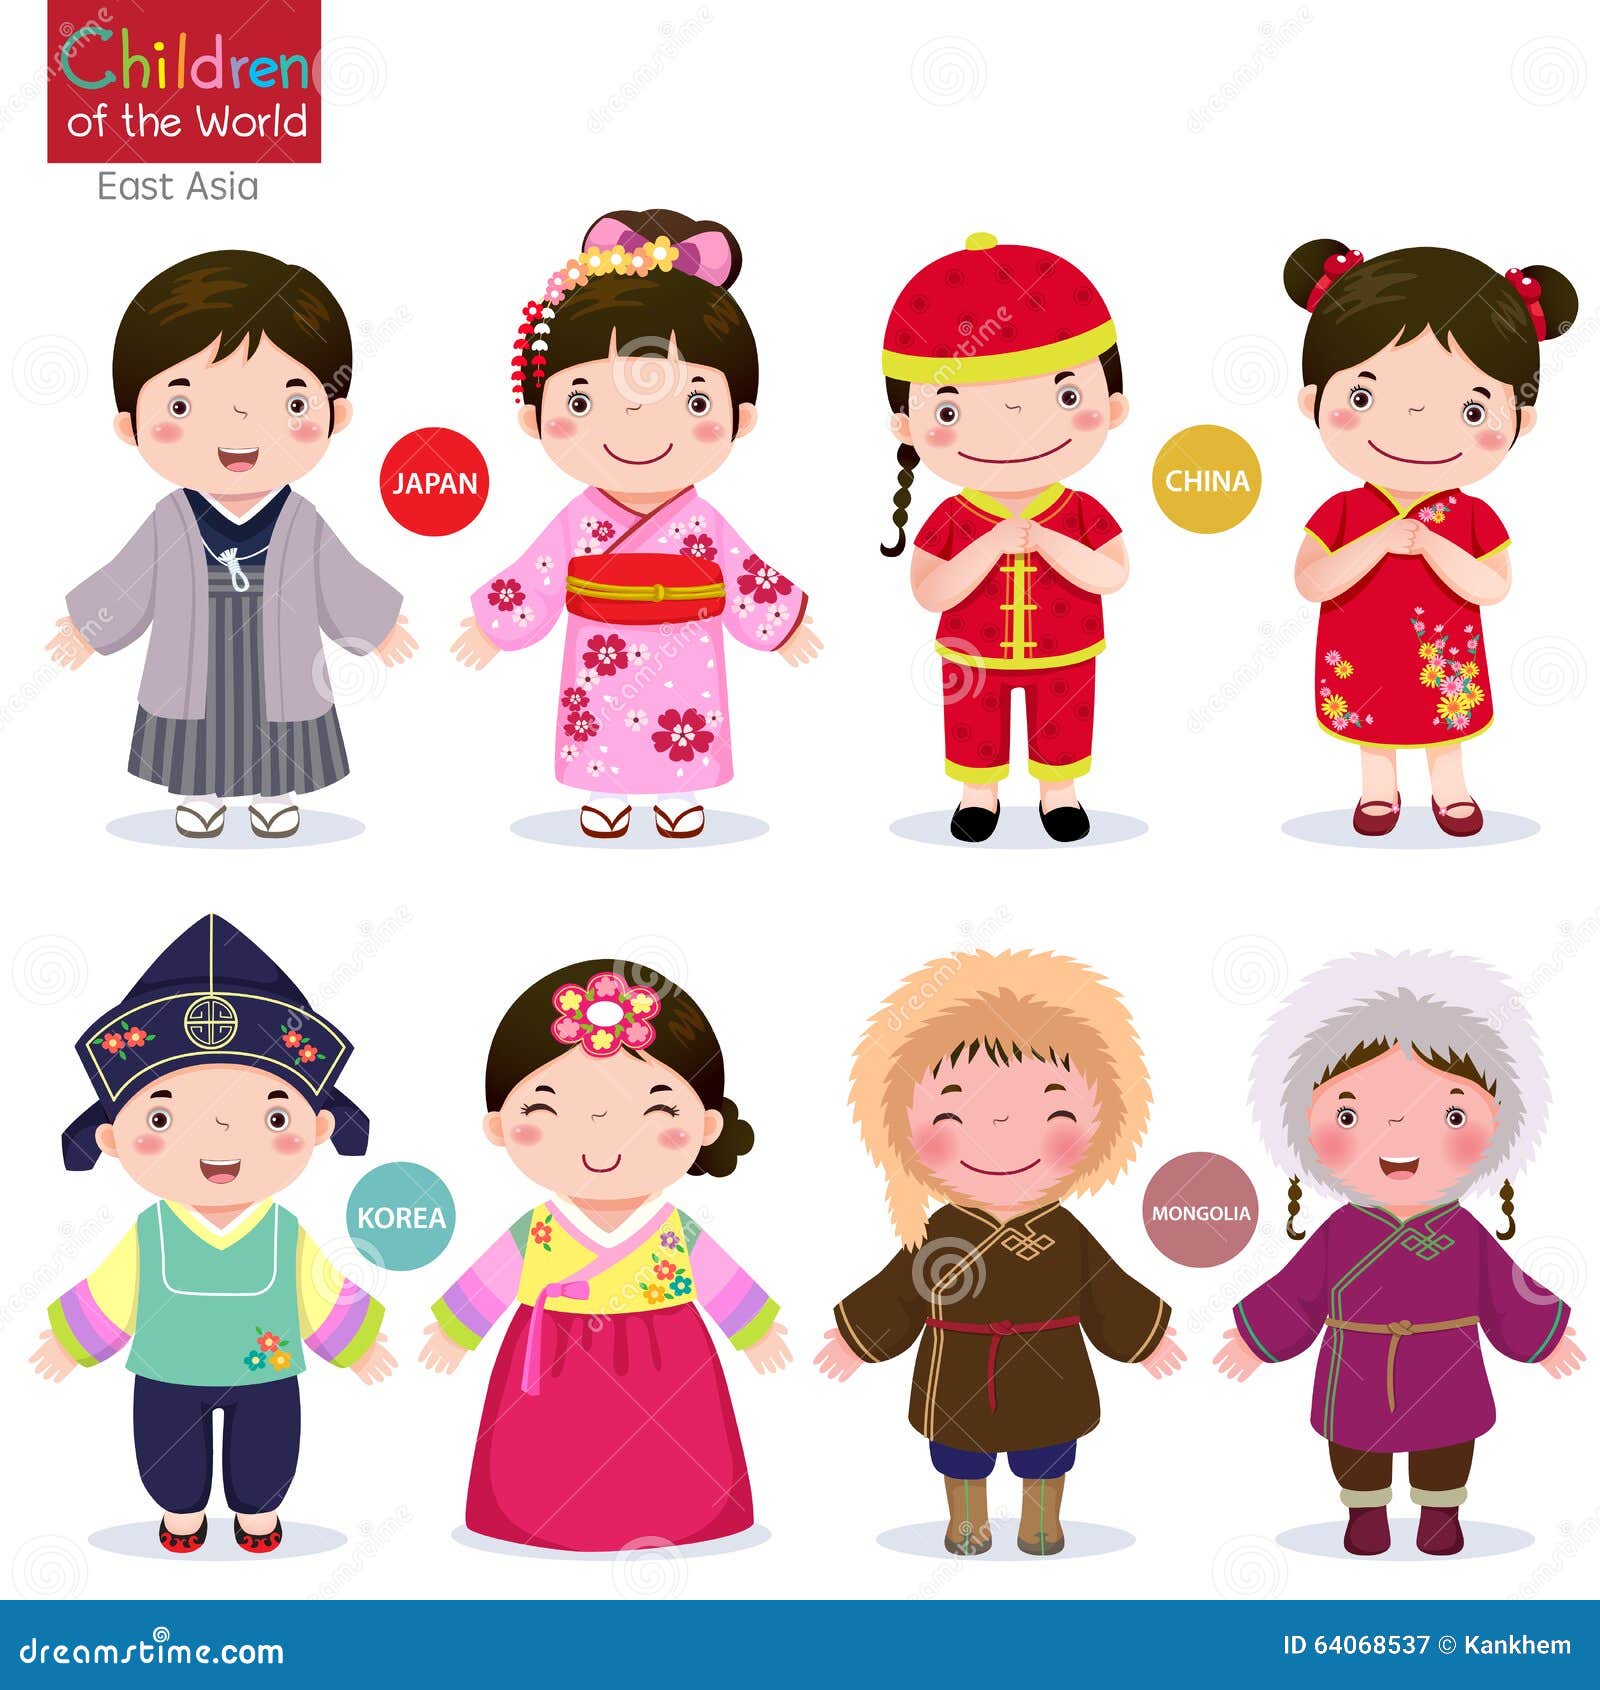 children of the world; japan, china, korea and mongolia